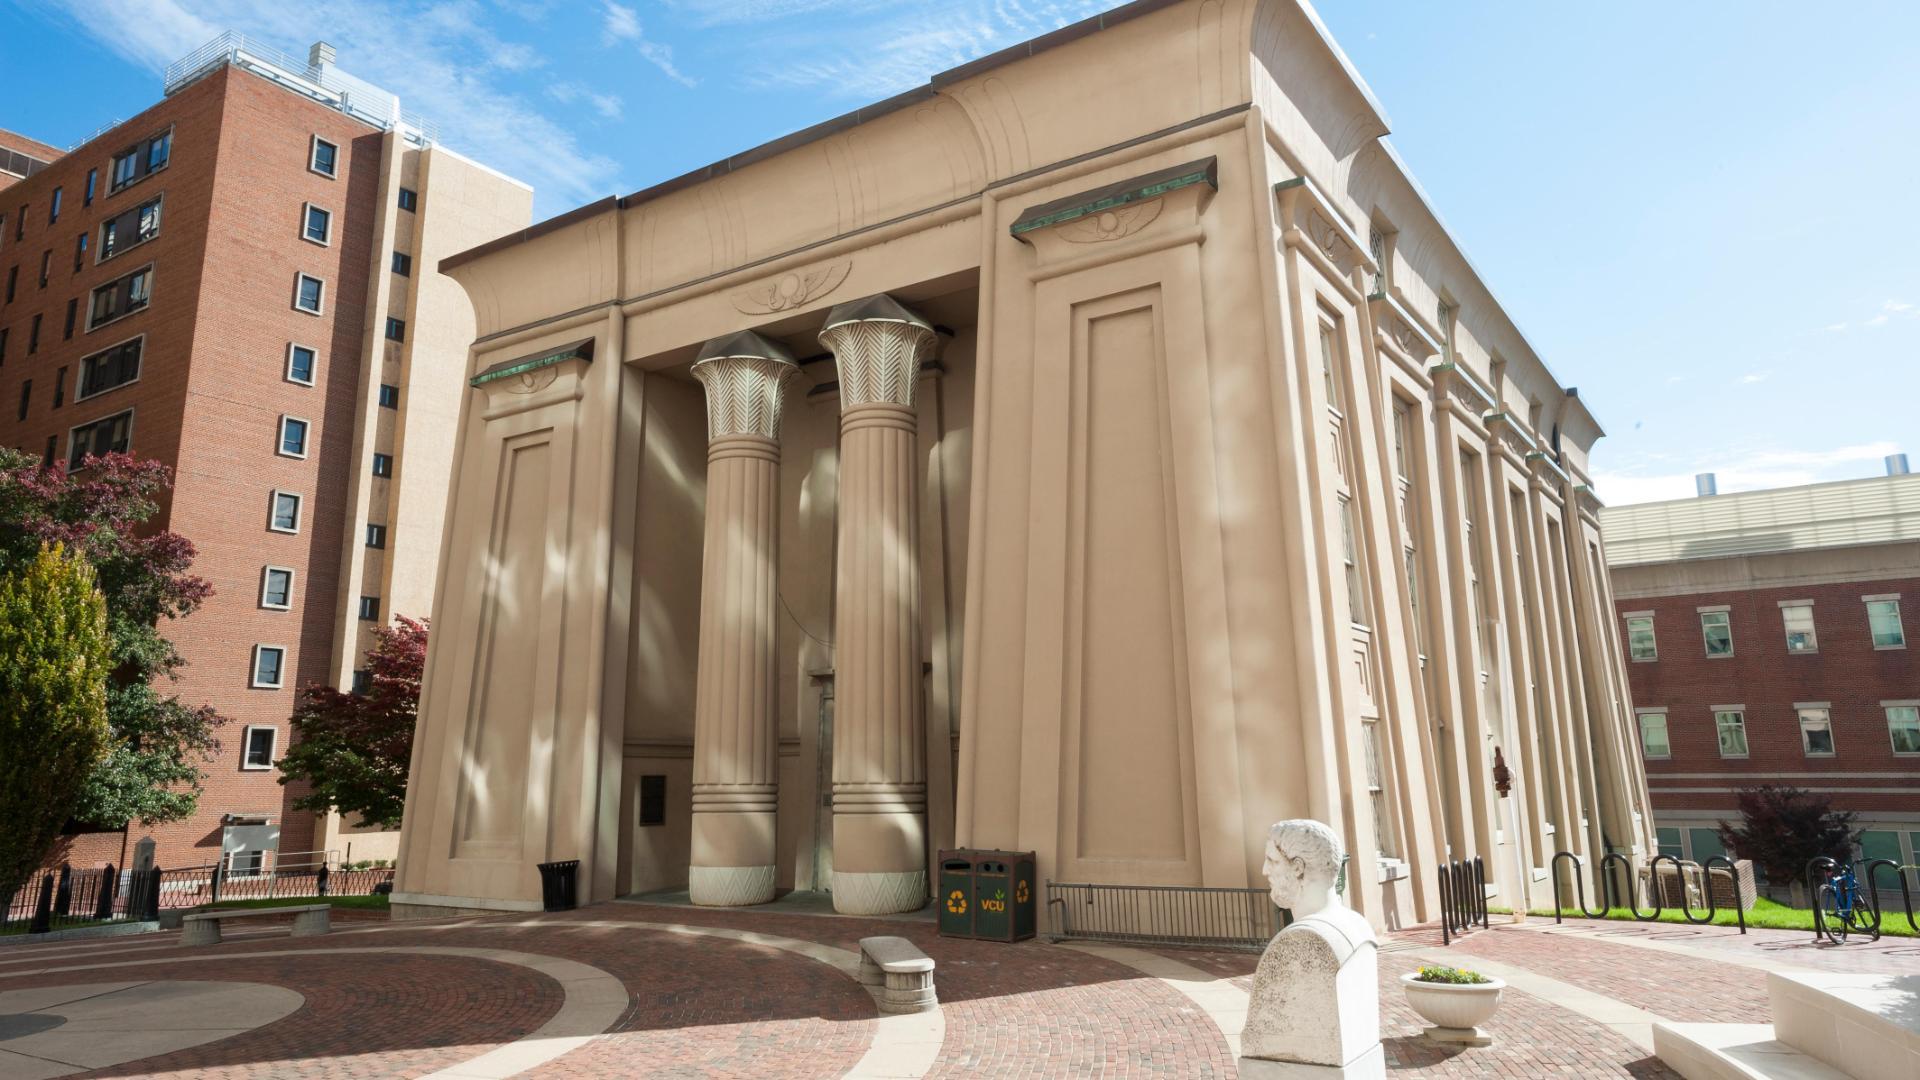 Egyptian building in Richmond, VA